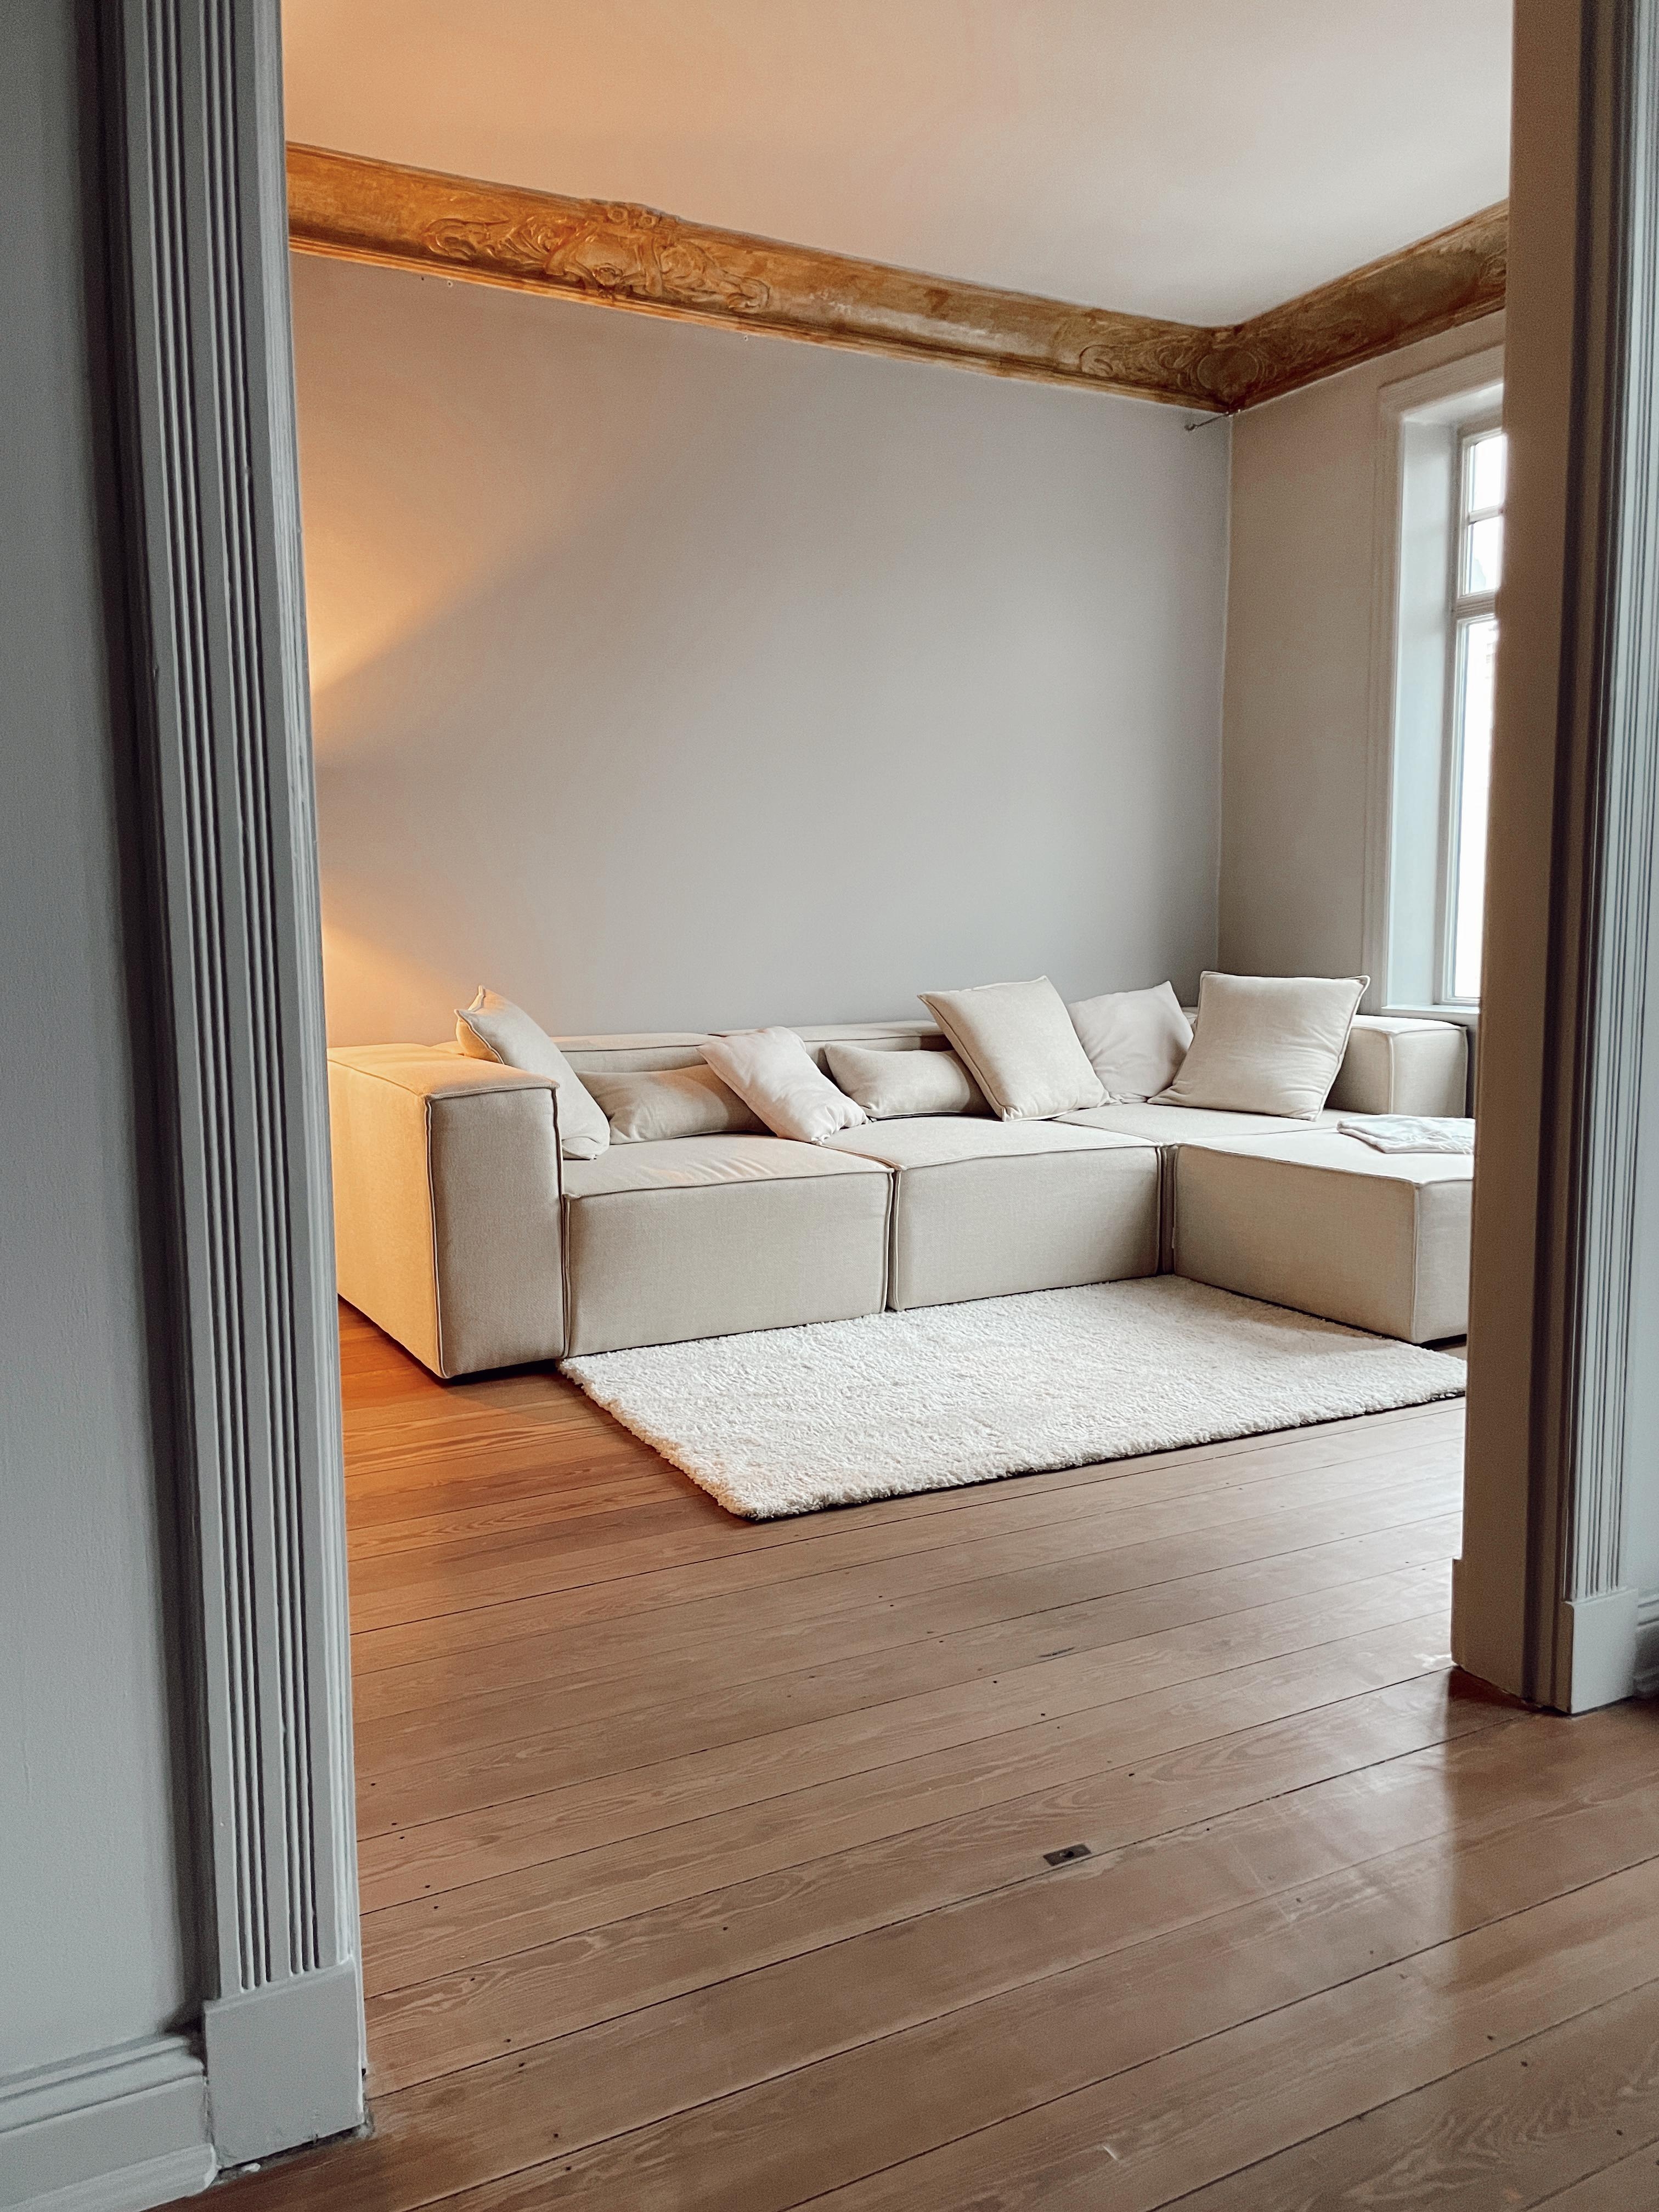 #couch #sofa #wohnzimmer #altbau #nordicliving #minimalismus